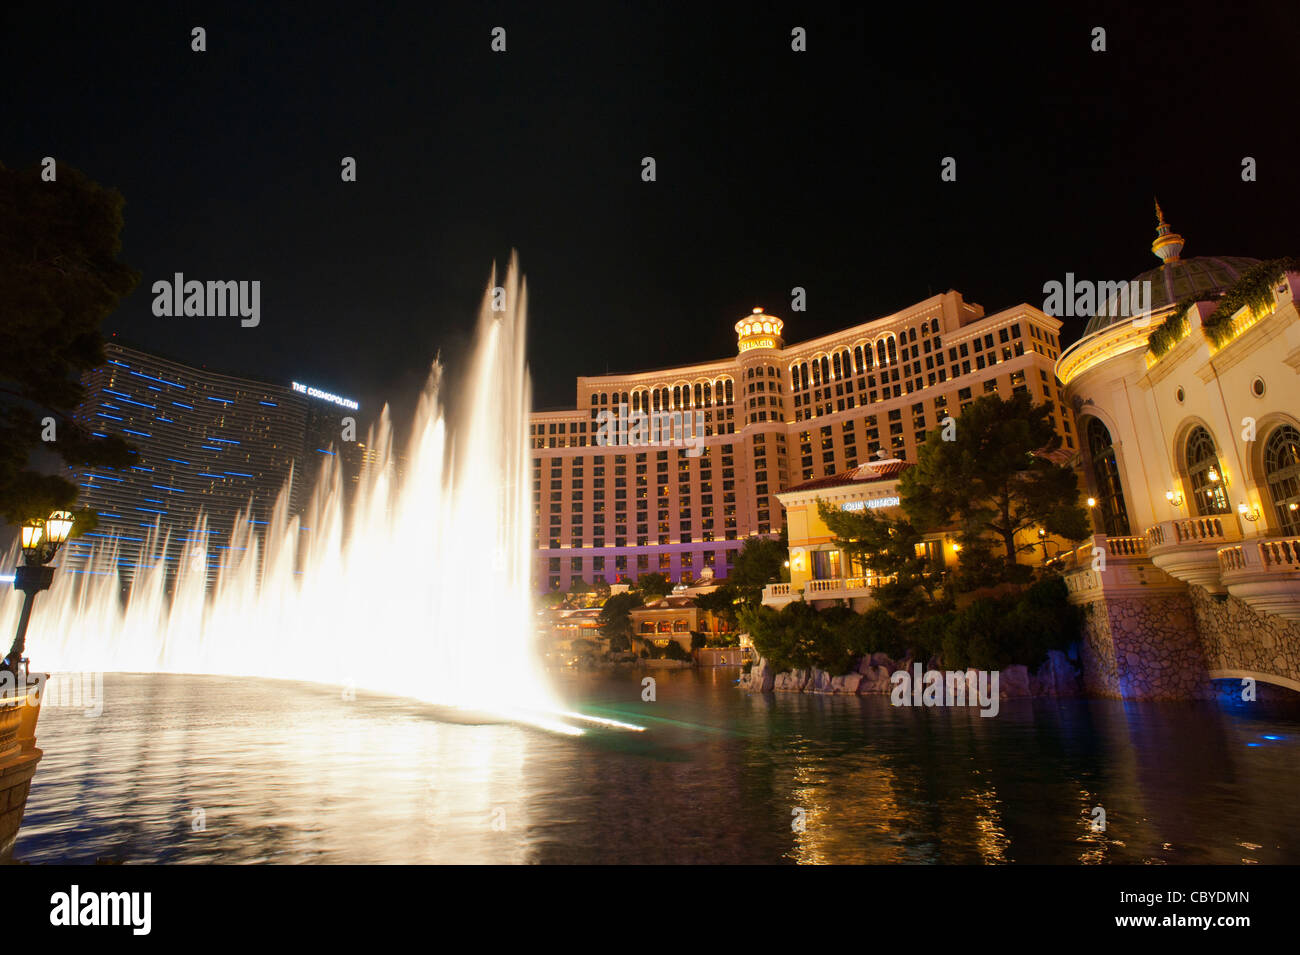 The fountains of Bellagio Hotel Las Vegas Stock Photo